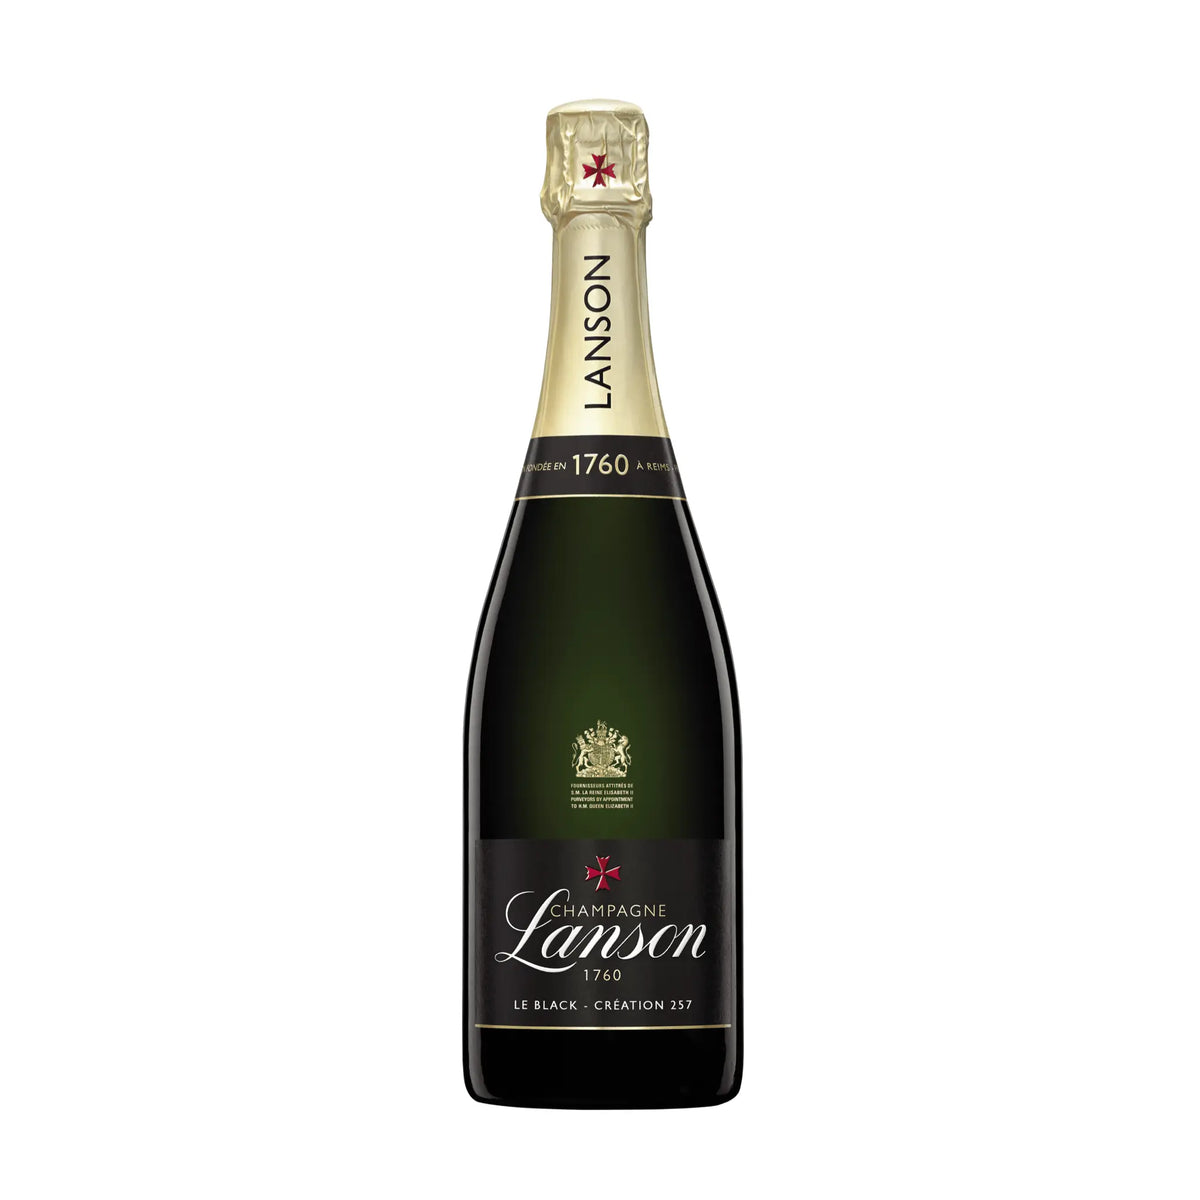 Champagne Lanson-Schaumwein-Champagner-Champagne-Frankreich-Le Black Creation 257-WINECOM